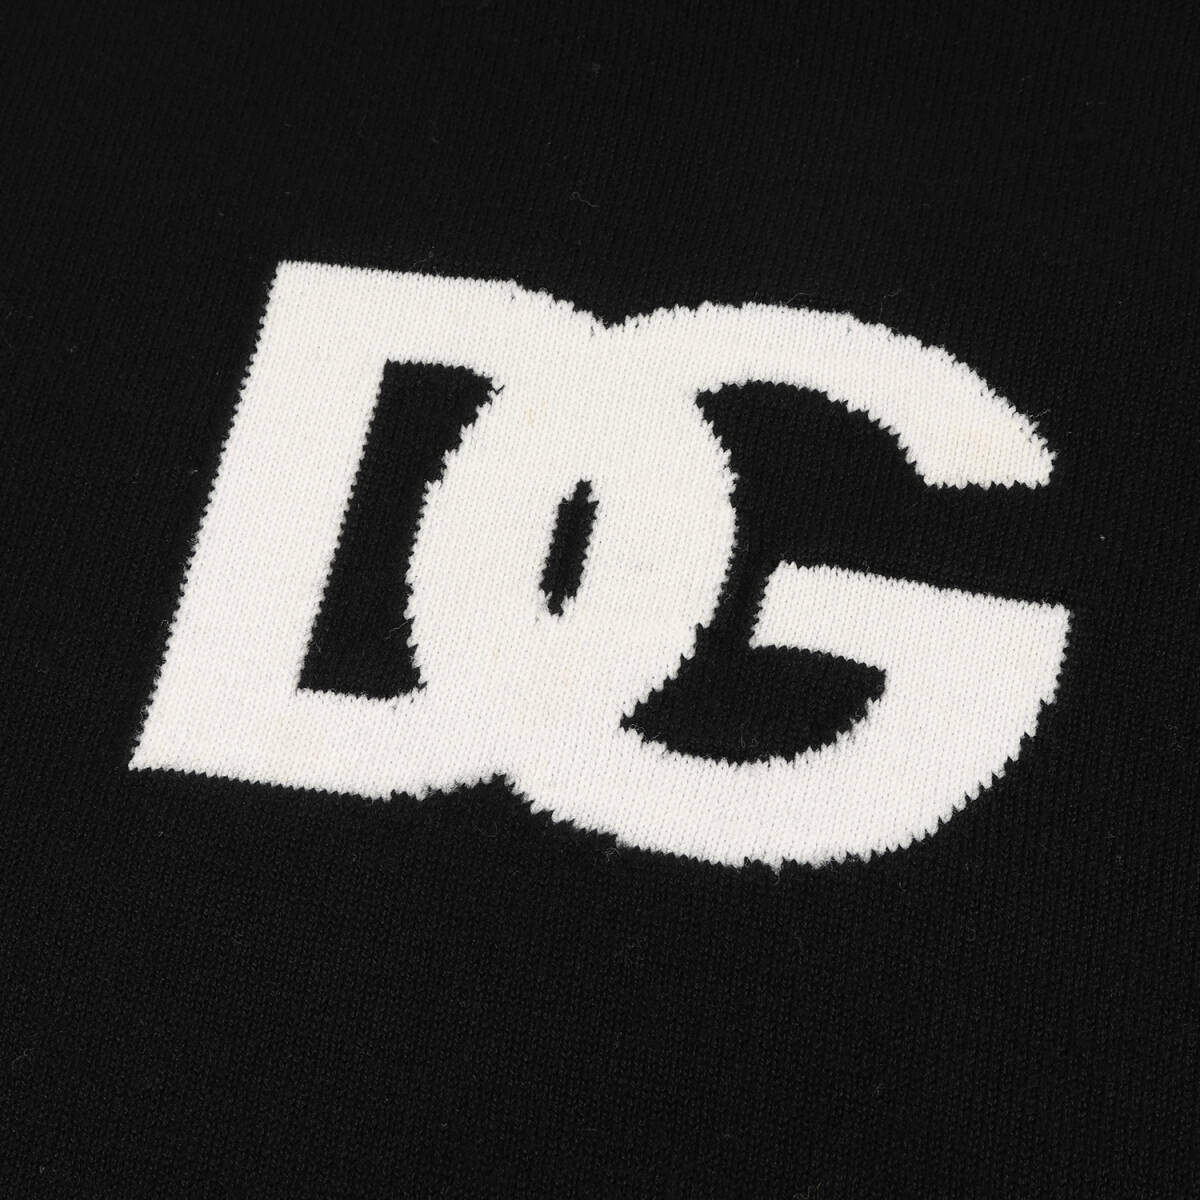 DOLCE&GABBANA Dolce & Gabbana knitted size :44 22AW DG Logo Jaguar do high gauge wool knitted sweater black Italy made 